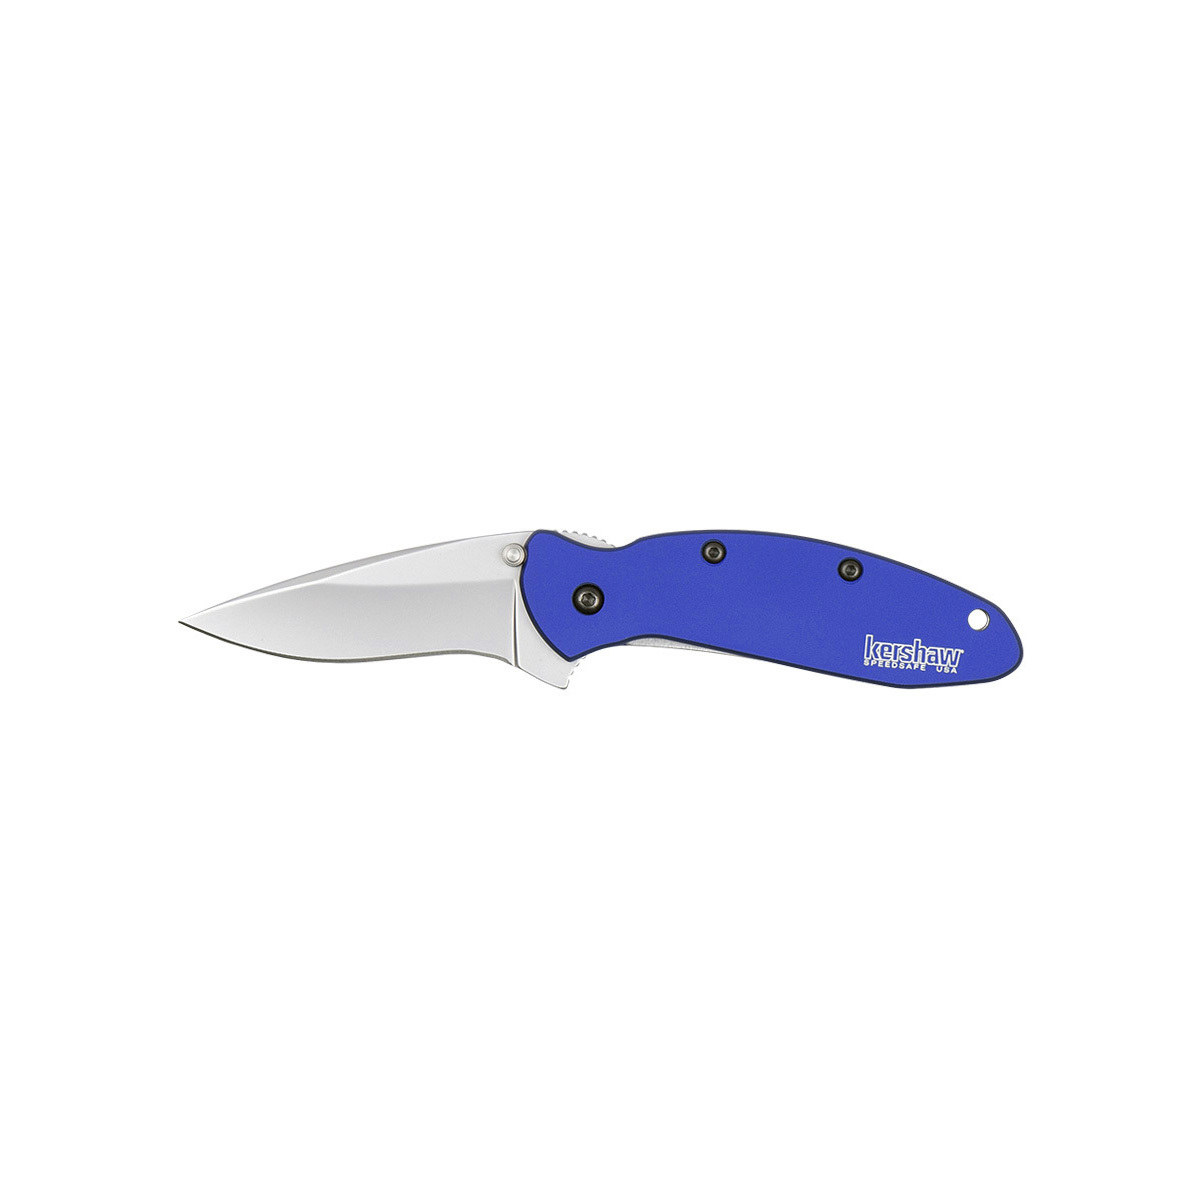 Складной полуавтоматический нож KERSHAW SCALLION, сталь 420HC, рукоять синий алюминий - фото 1